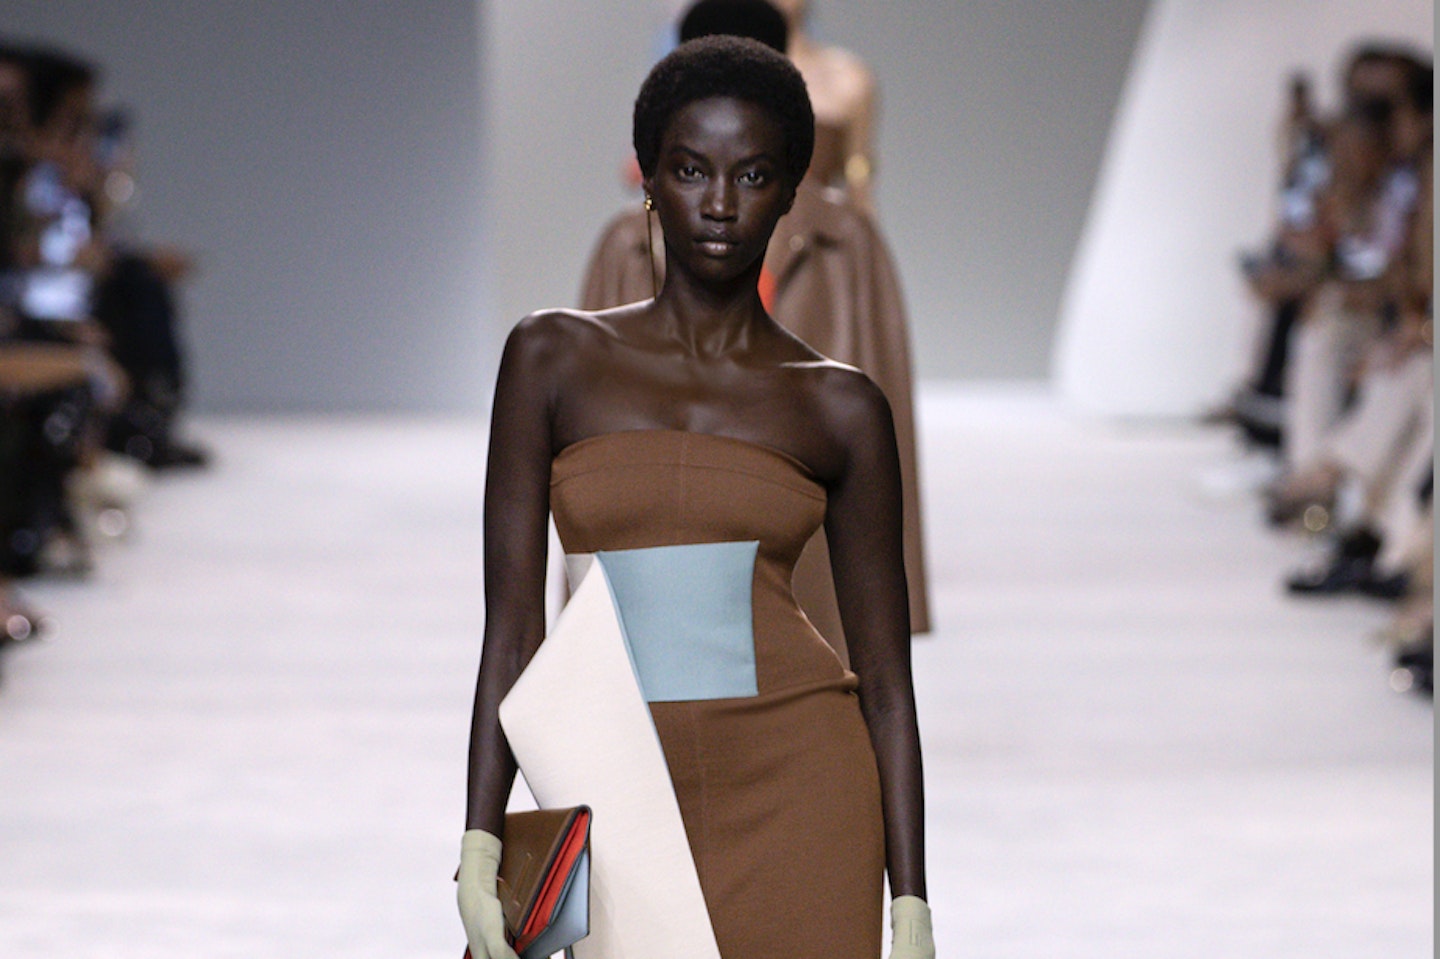 Milan Fashion Week: Fendi offers chic utilitarian clothes